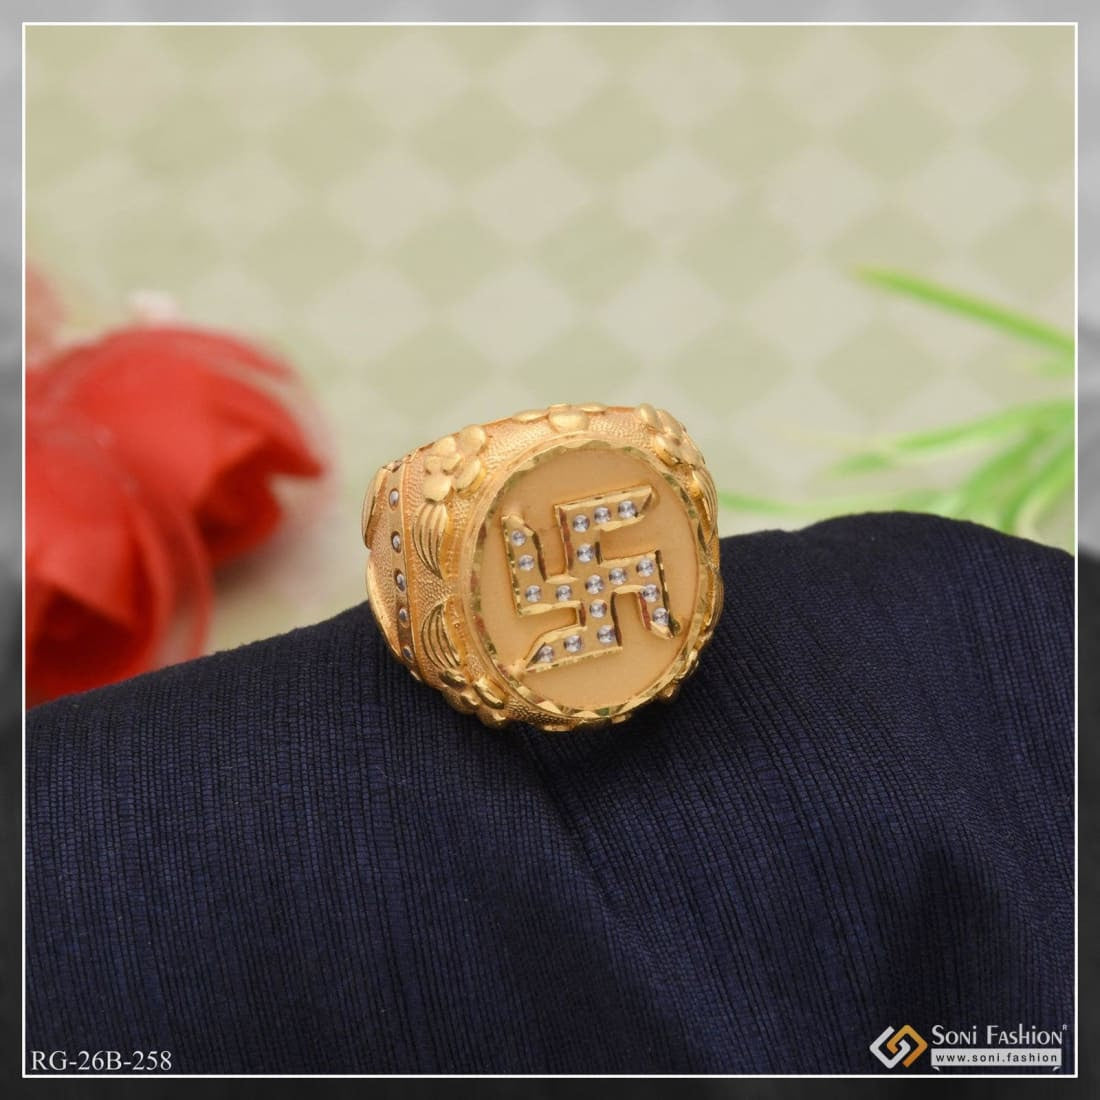 1 Gram Gold Plated Swastik Exquisite Design High-quality Ring For Men -  Style B258 at Rs 2650.00 | सोने का पानी चढ़ी हुई अंगूठी - Soni Fashion,  Rajkot | ID: 2850376880291